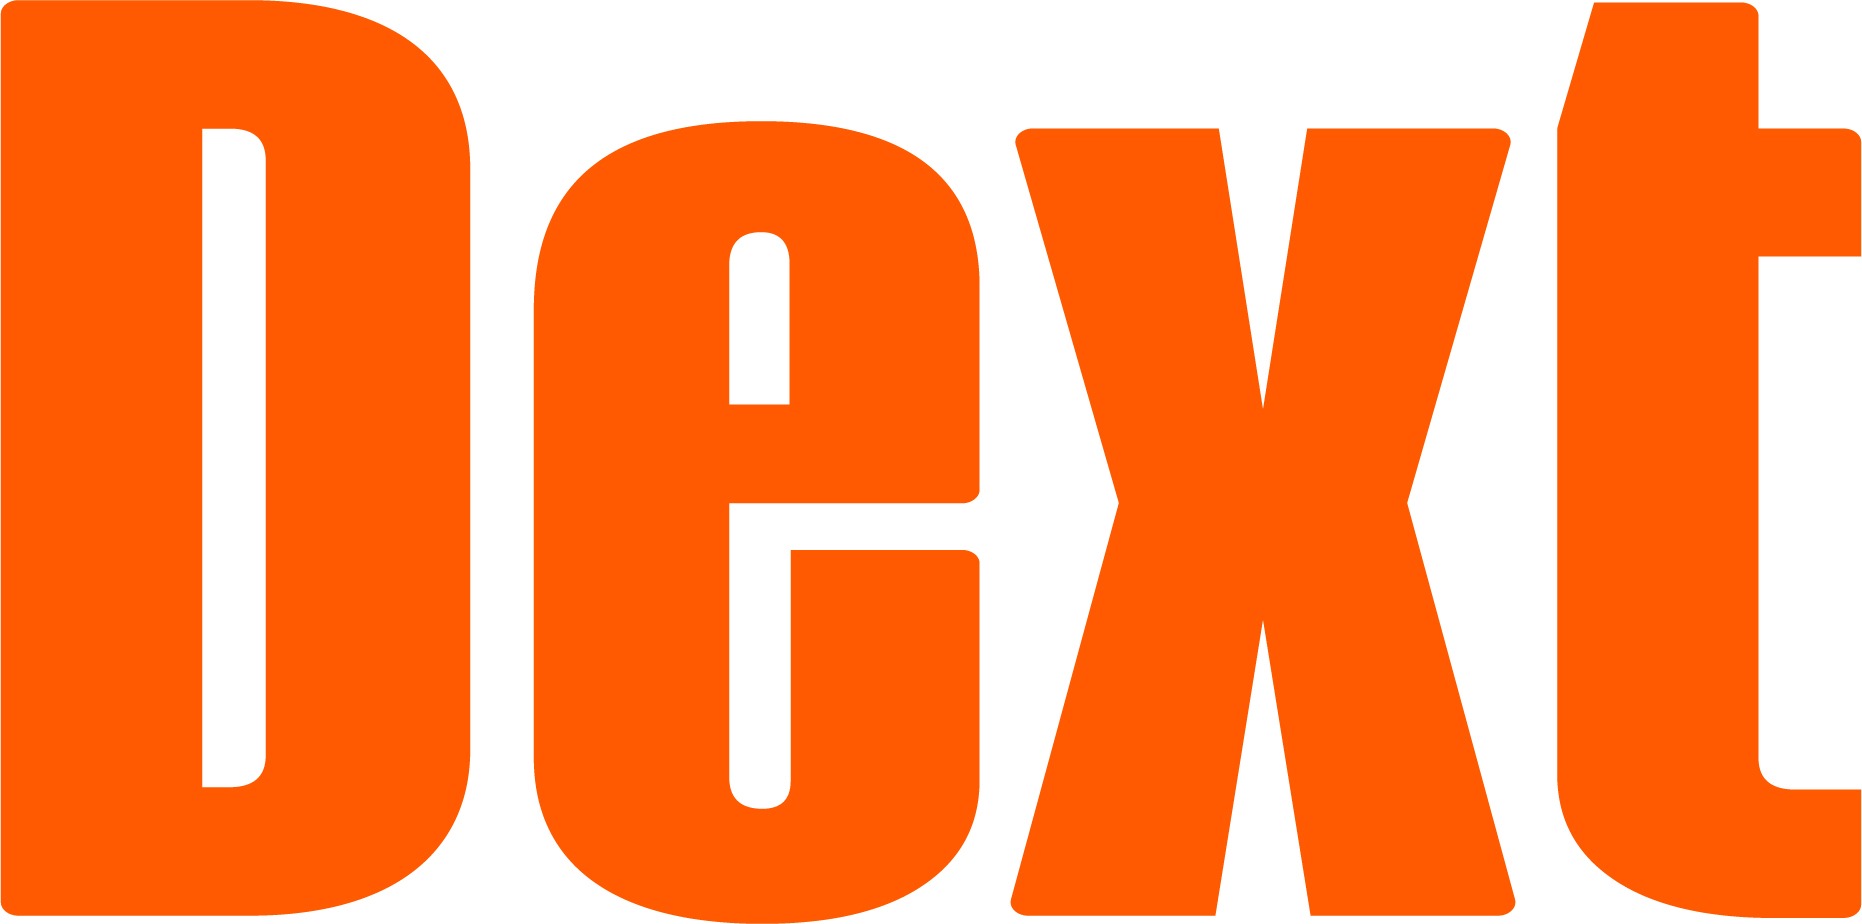 Xero partner logo